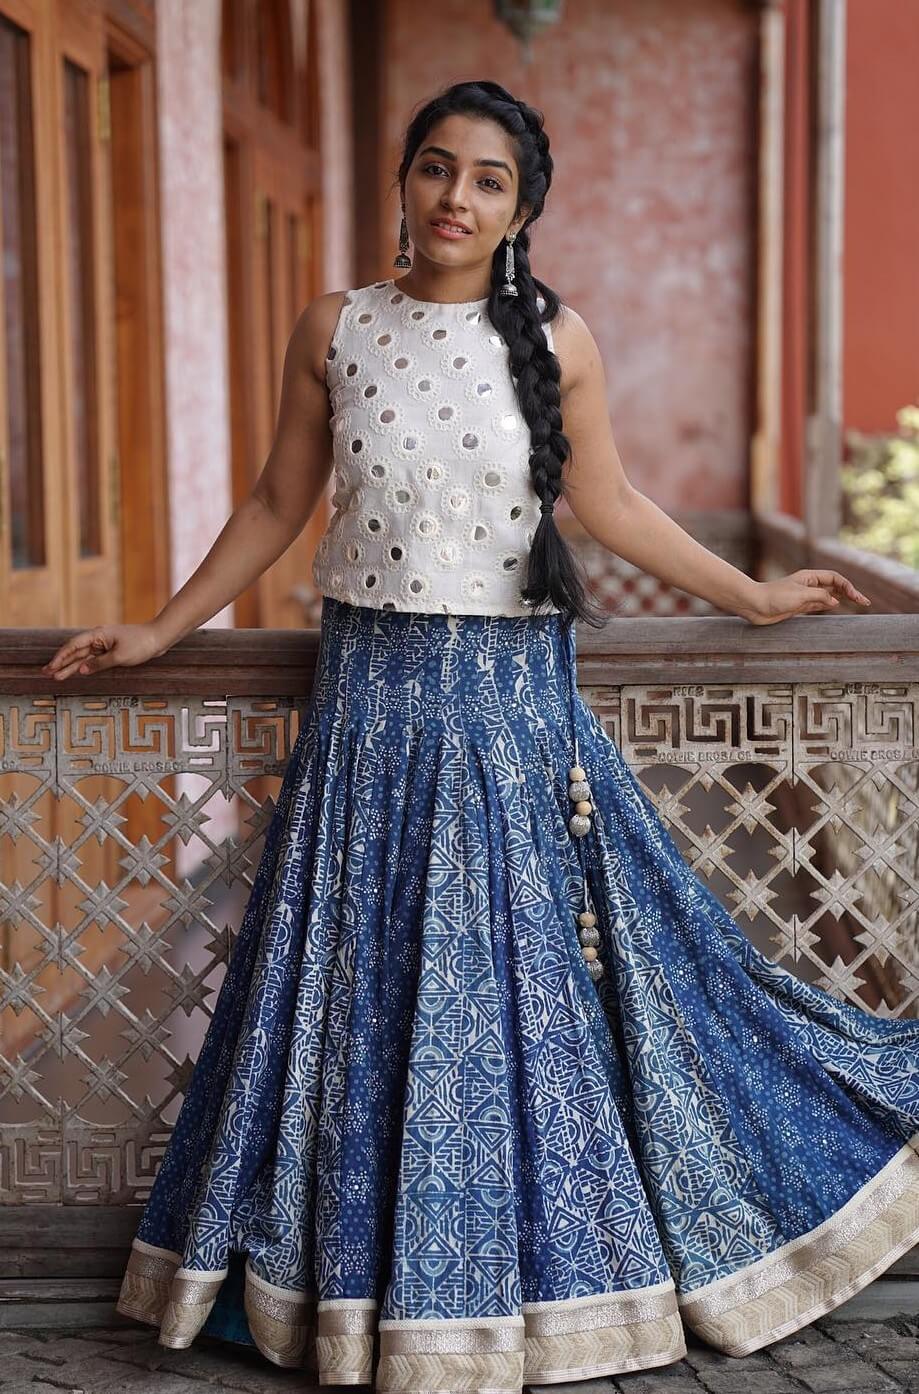 Beautiful Rajisha Vijayan In Blue Printed Long Skirt With White Sleeveless Top